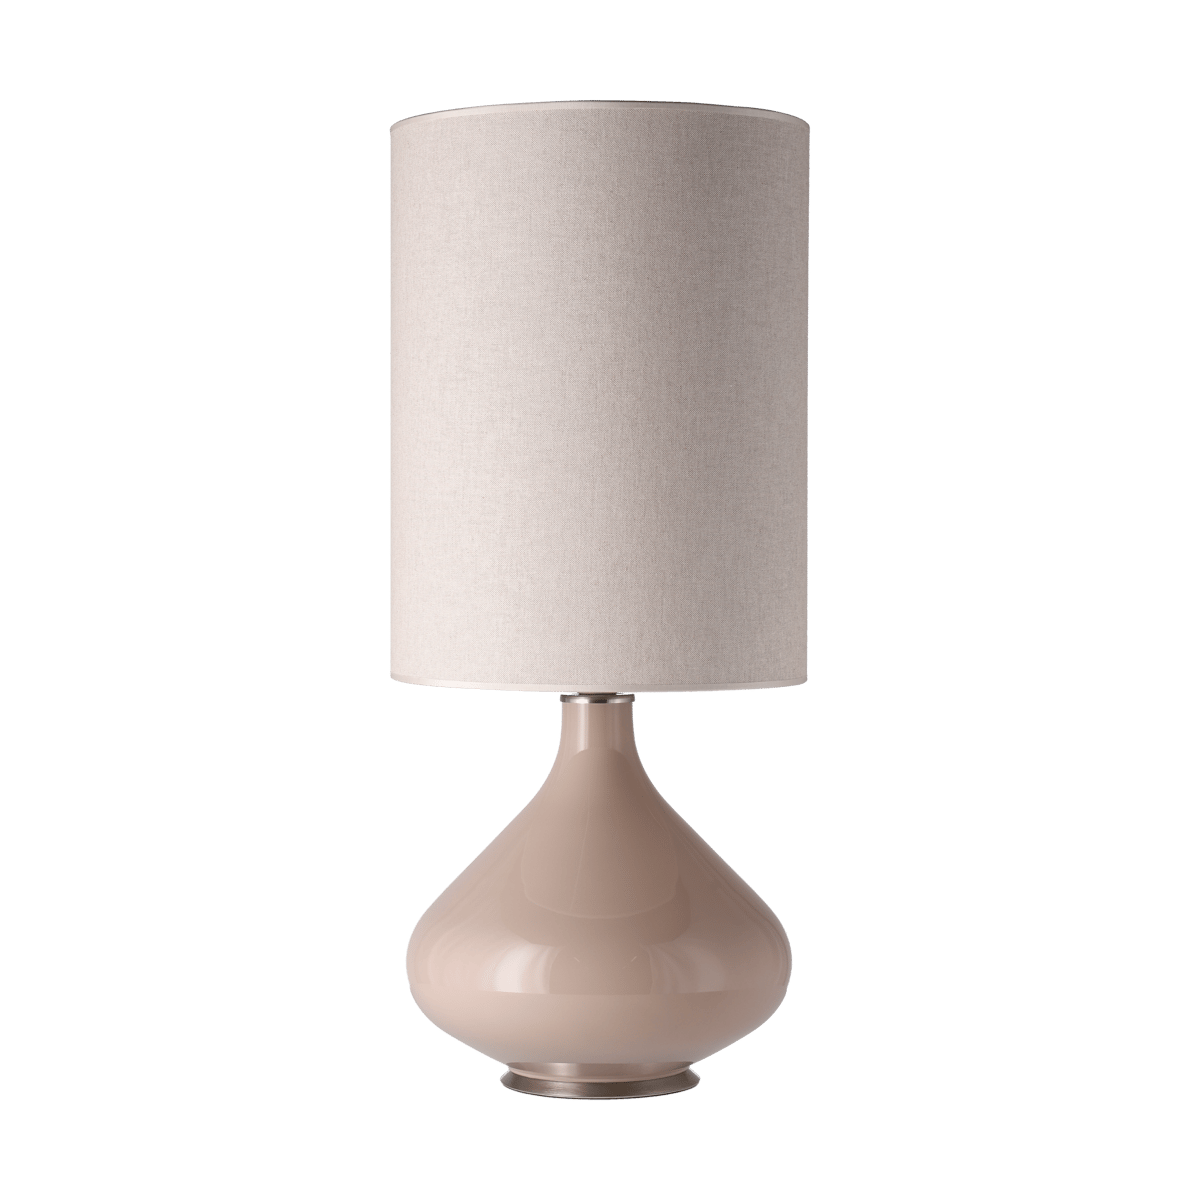 Flavia Lamps Flavia tafellamp beige lampvoet Milano Tostado L